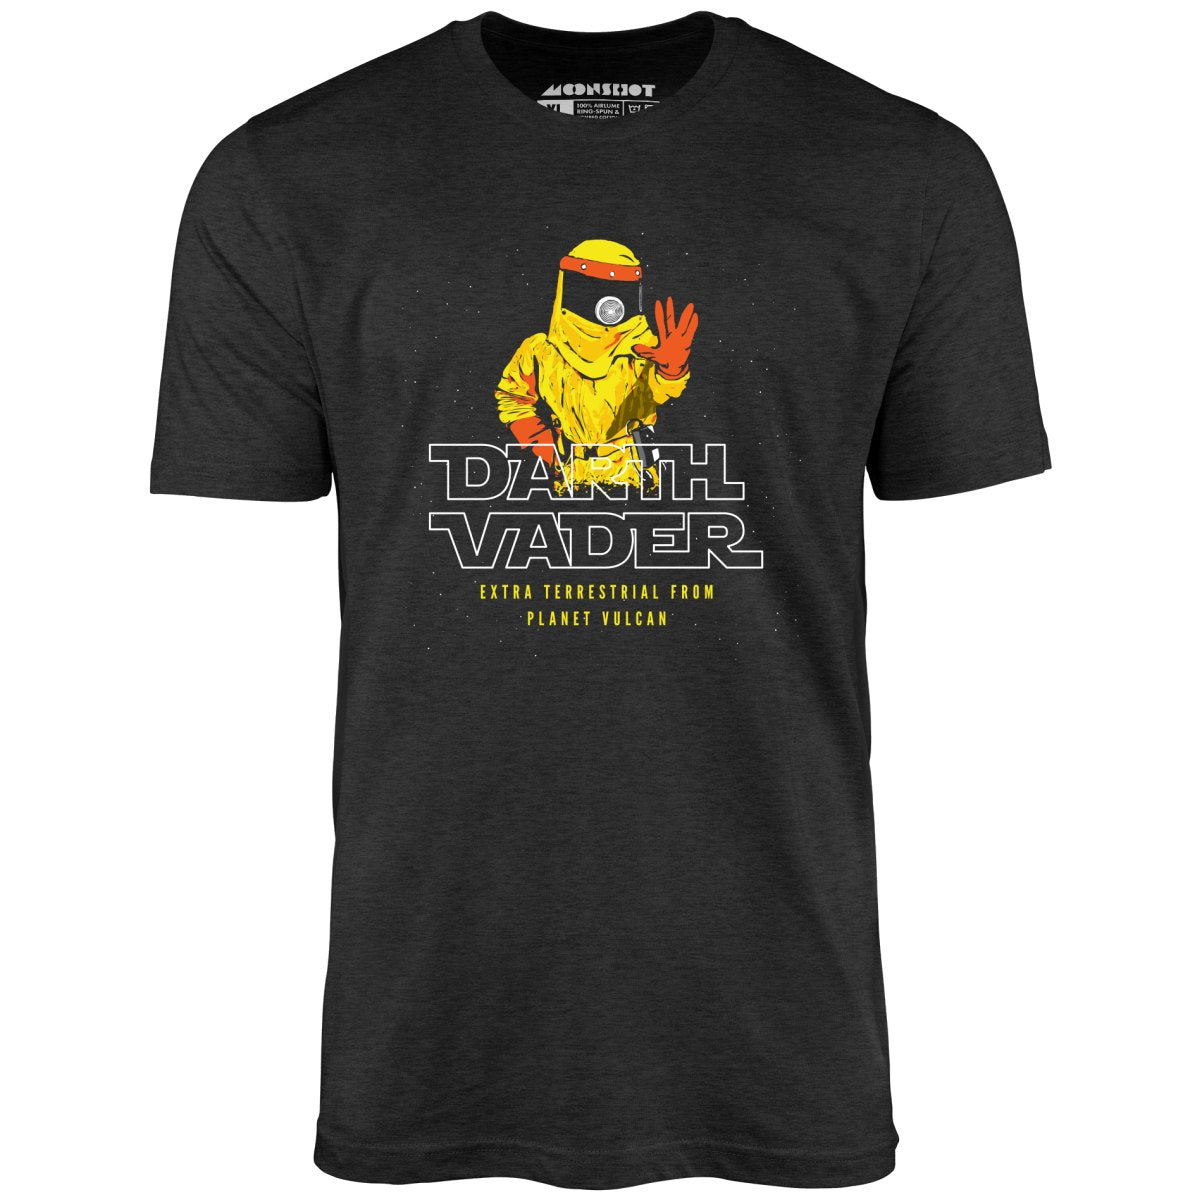 Darth Vader Planet Vulcan Parody - Unisex T-Shirt